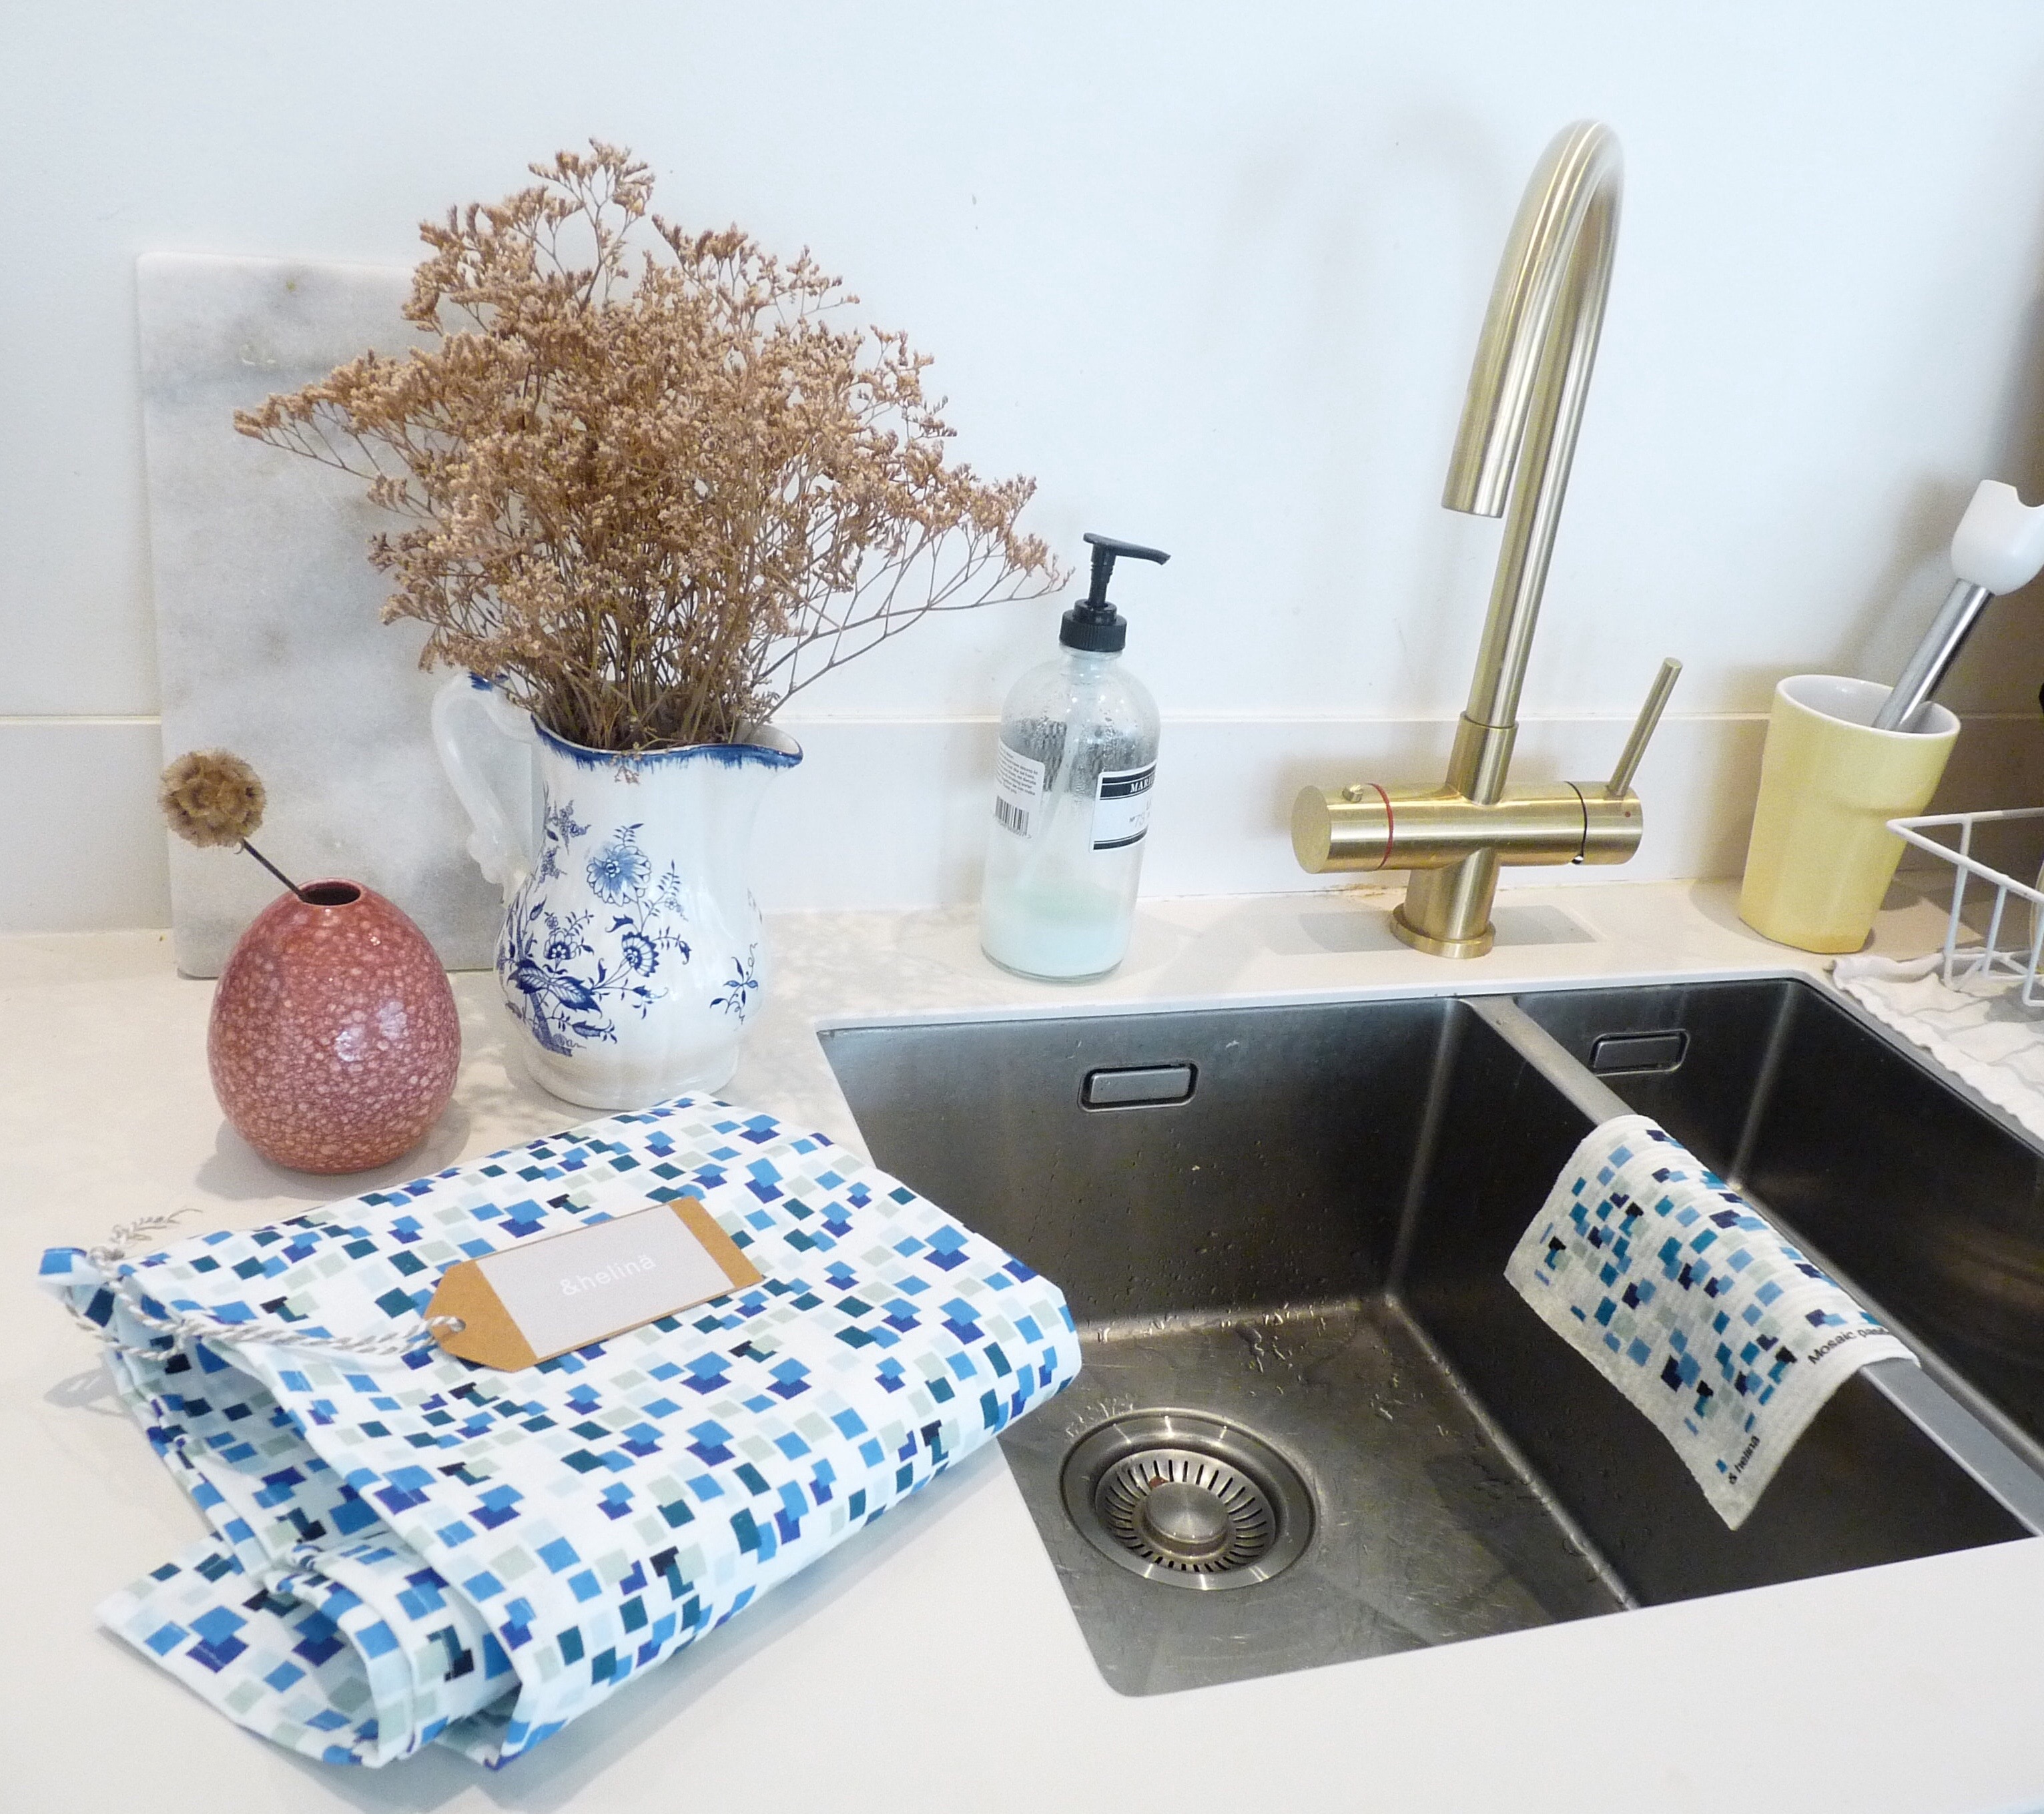 tea towel and dish cloth set;
Mosaic Pacific